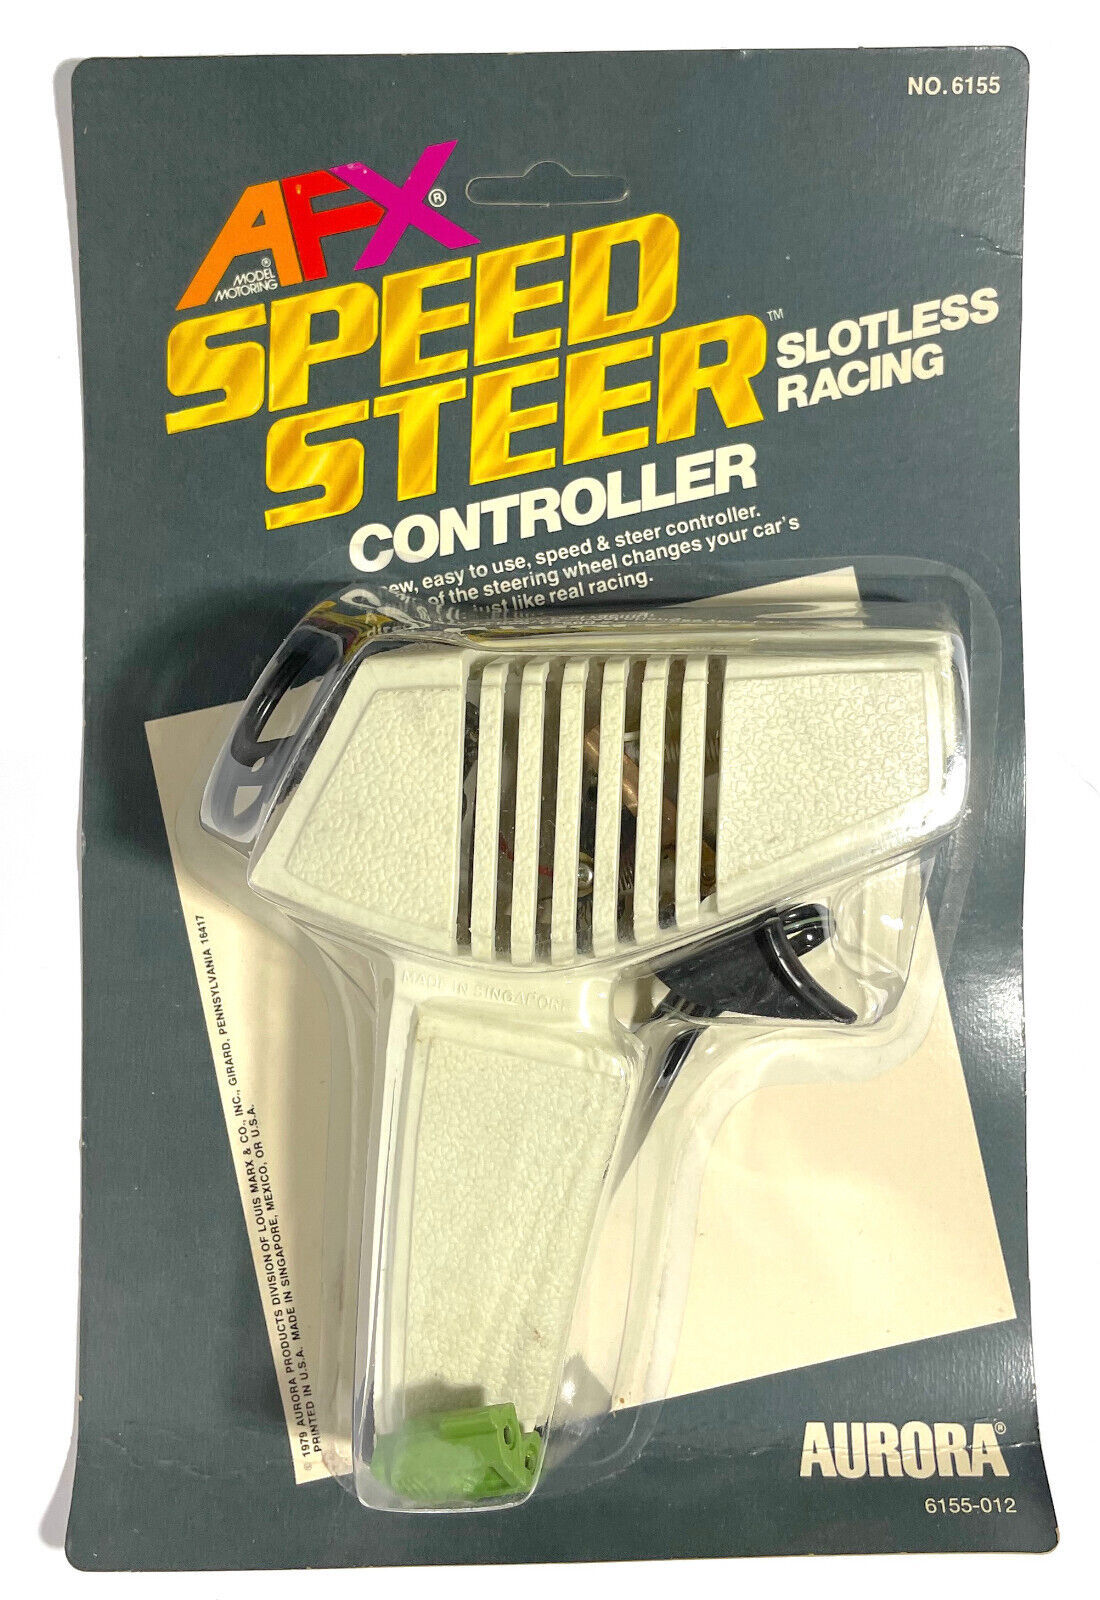 1978 Aurora SpeedSteer TCR Slot Car Slotless Racing Track SPEED CONTROLLER 6155 - $12.99